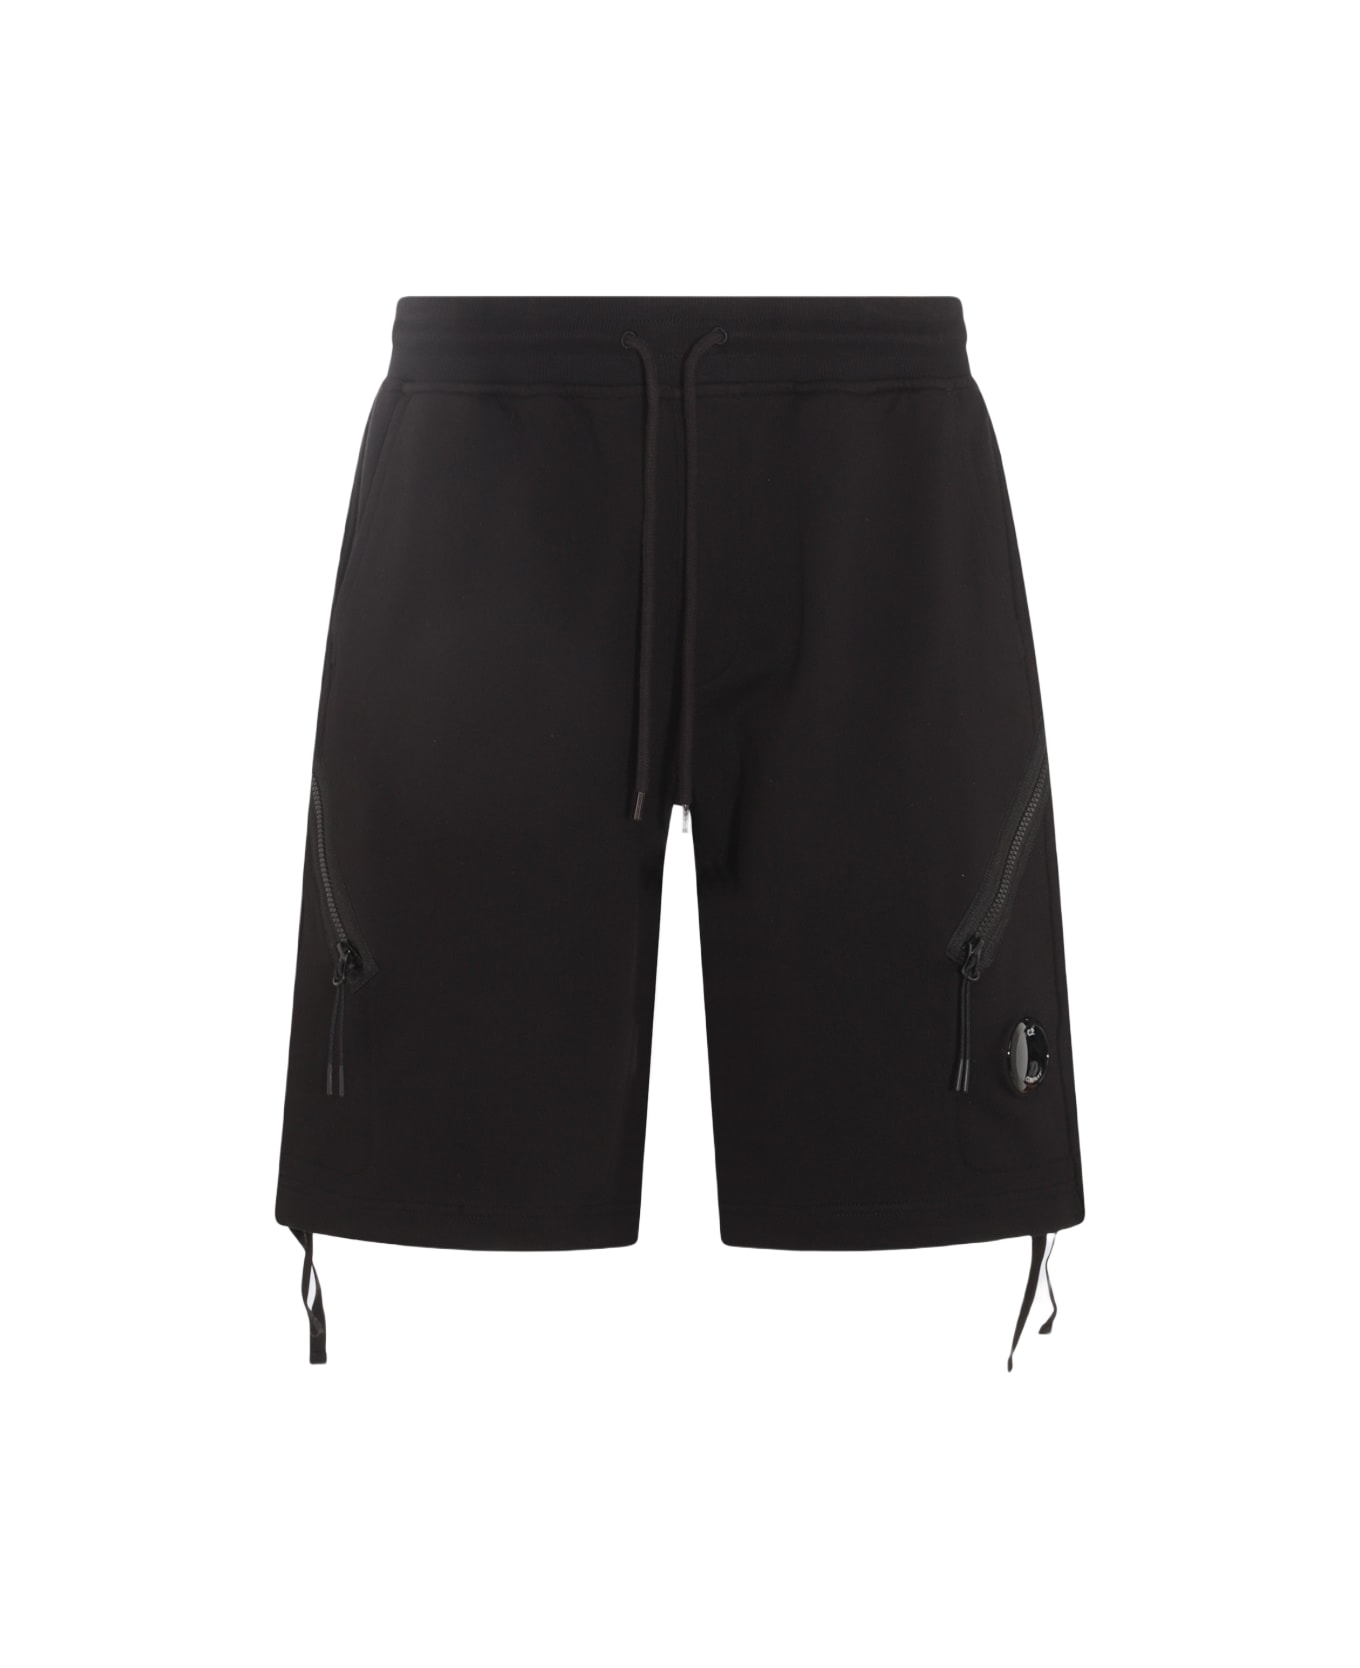 C.P. Company Black Cotton Shorts - Black ショートパンツ